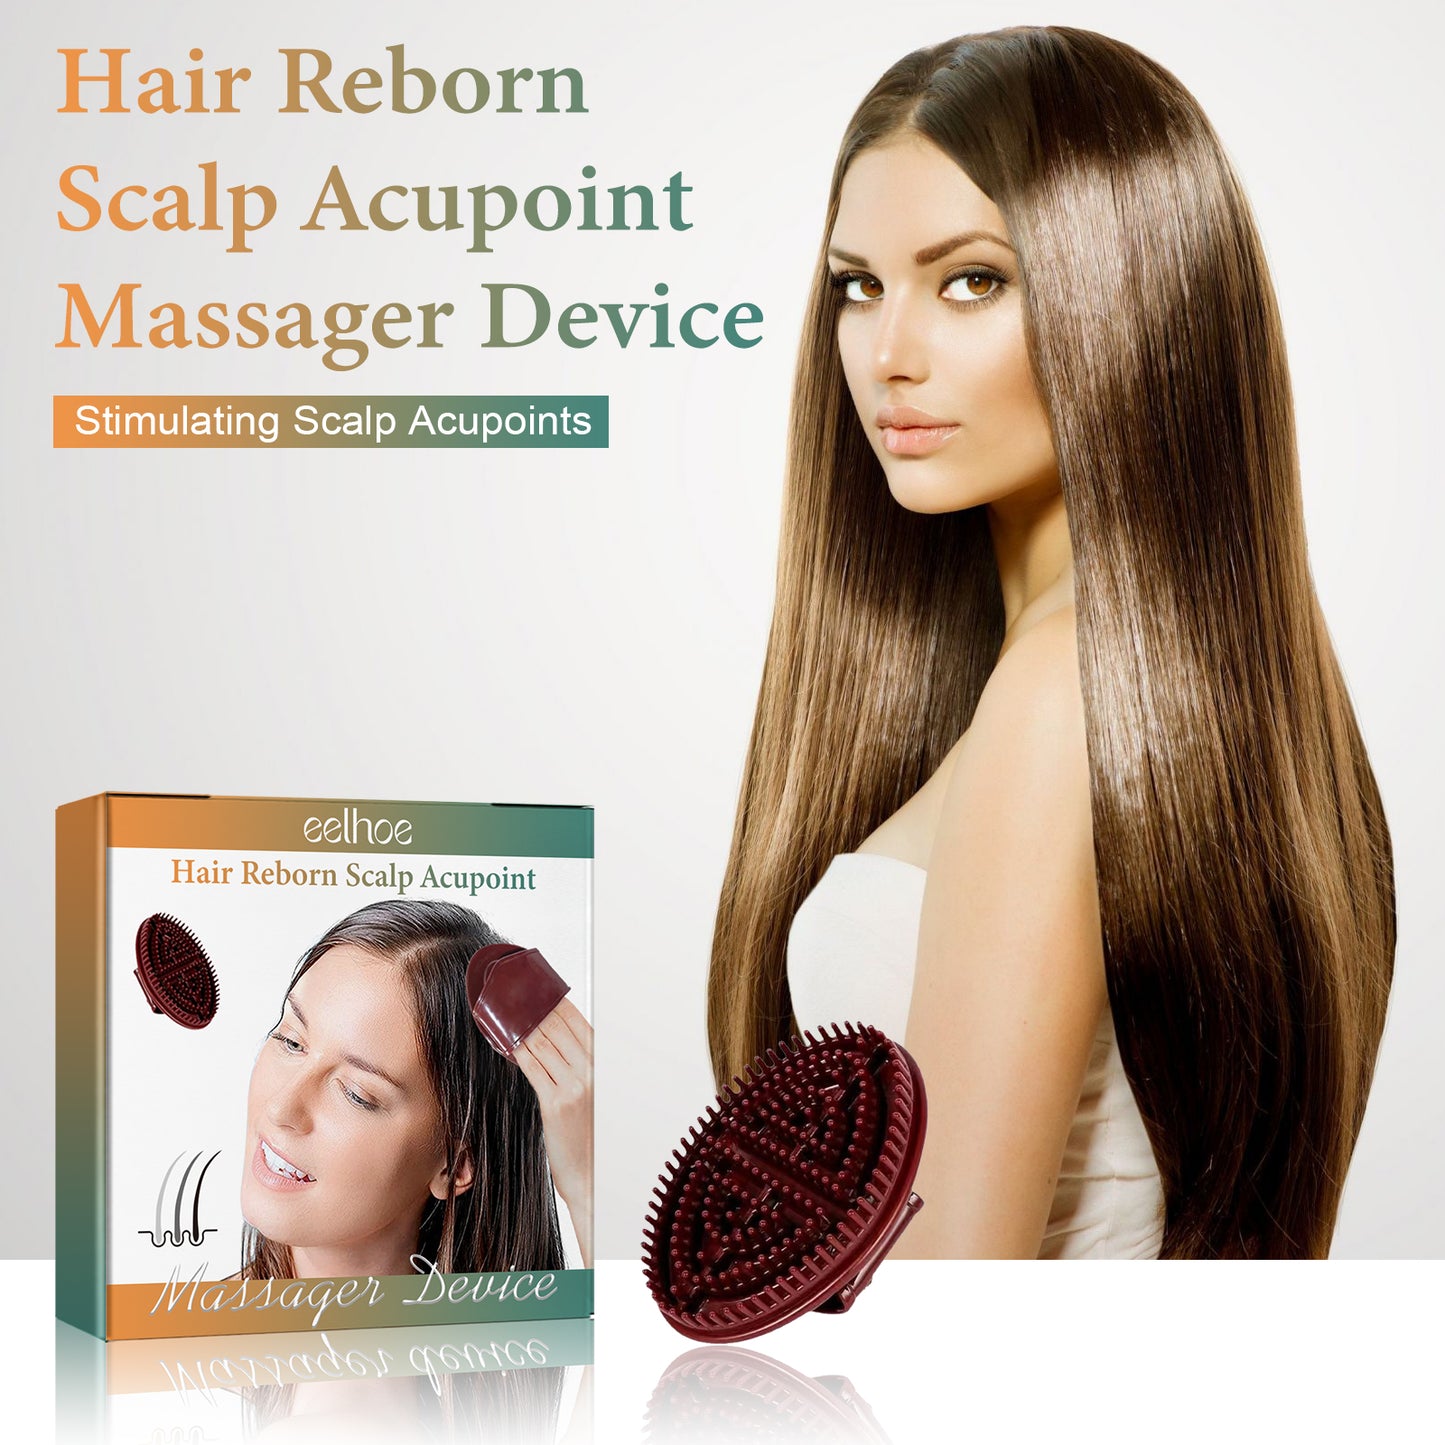 Hair Reborn Scalp Acupoint Massager